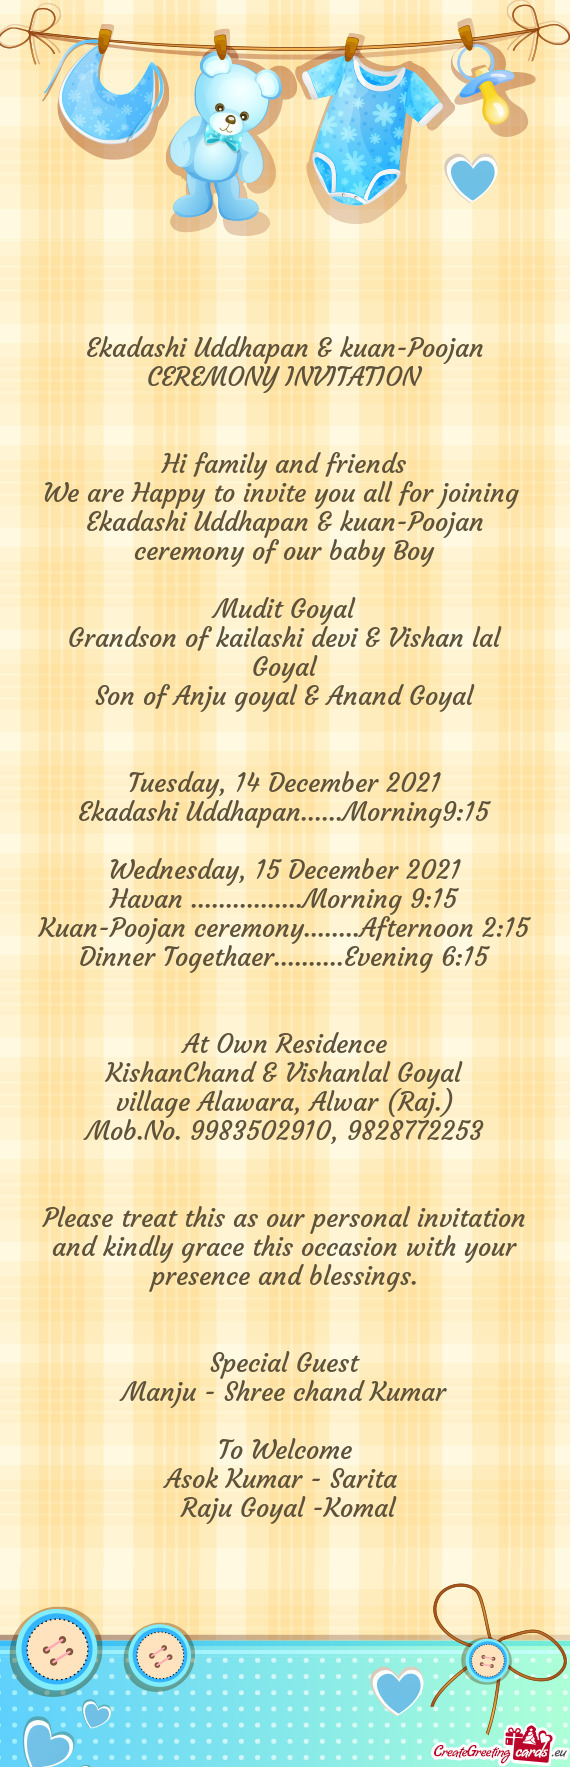 Ekadashi Uddhapan & kuan-Poojan CEREMONY INVITATION